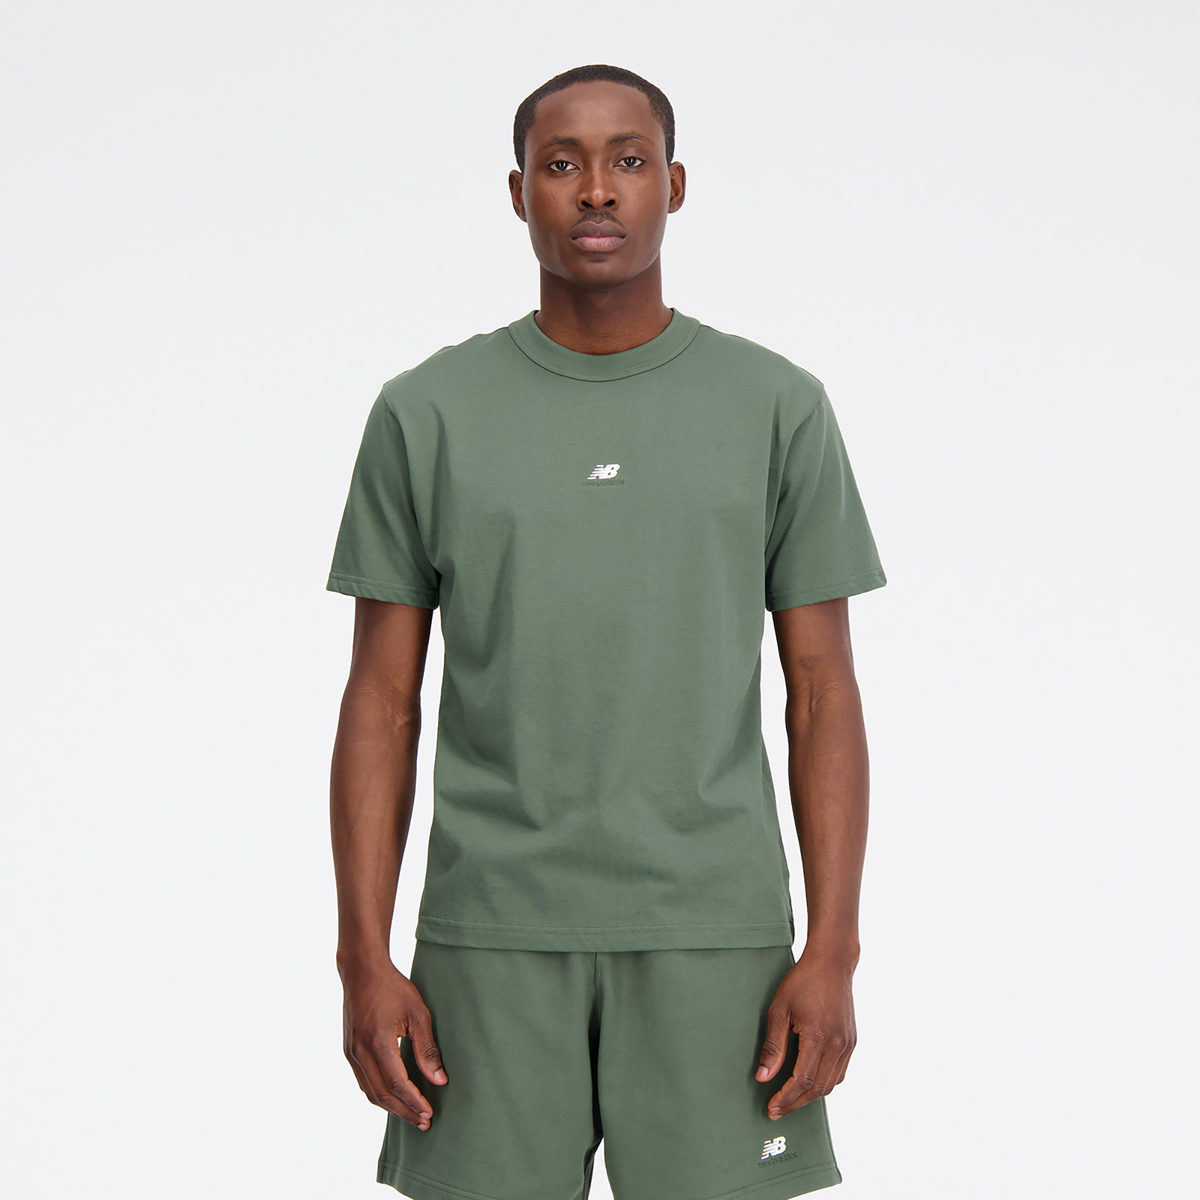 New-Balance-Athletics-Graphic-T-Shirt-Green-White-1